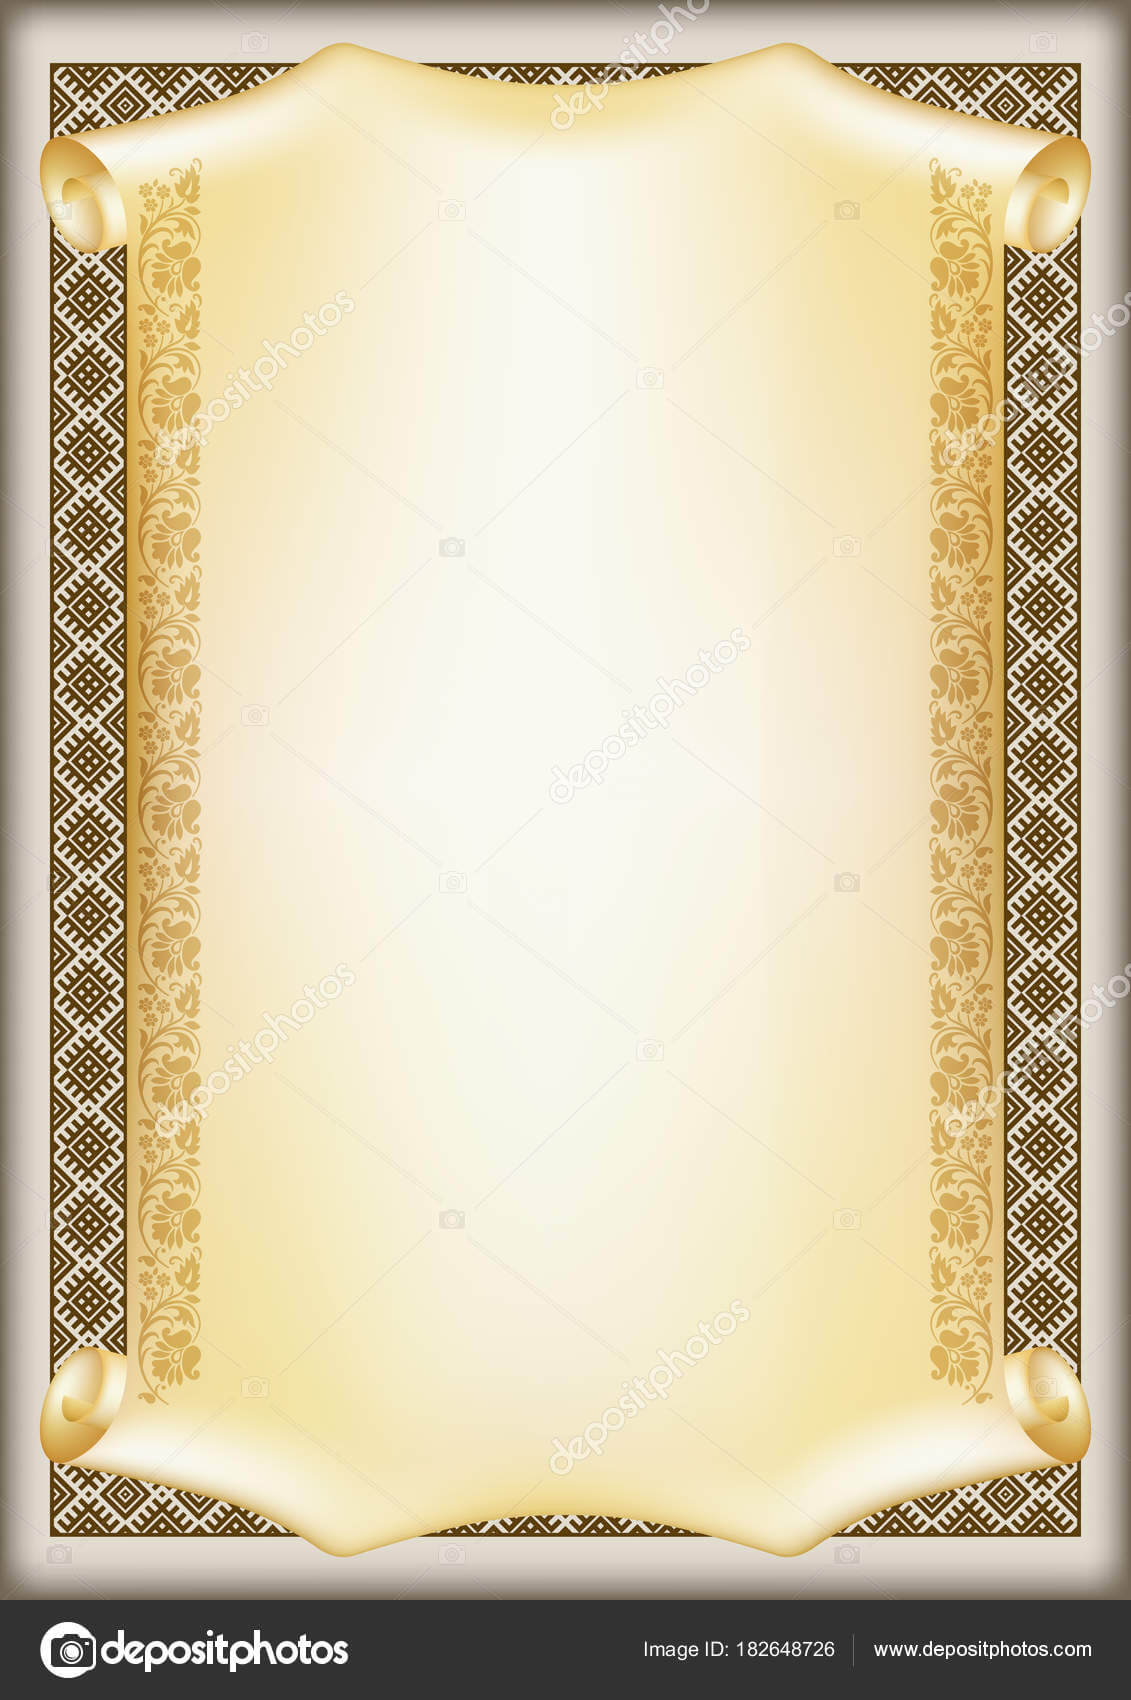 Decorative Rectangular Framework Ethnic Slavic Ornament Within Certificate Scroll Template